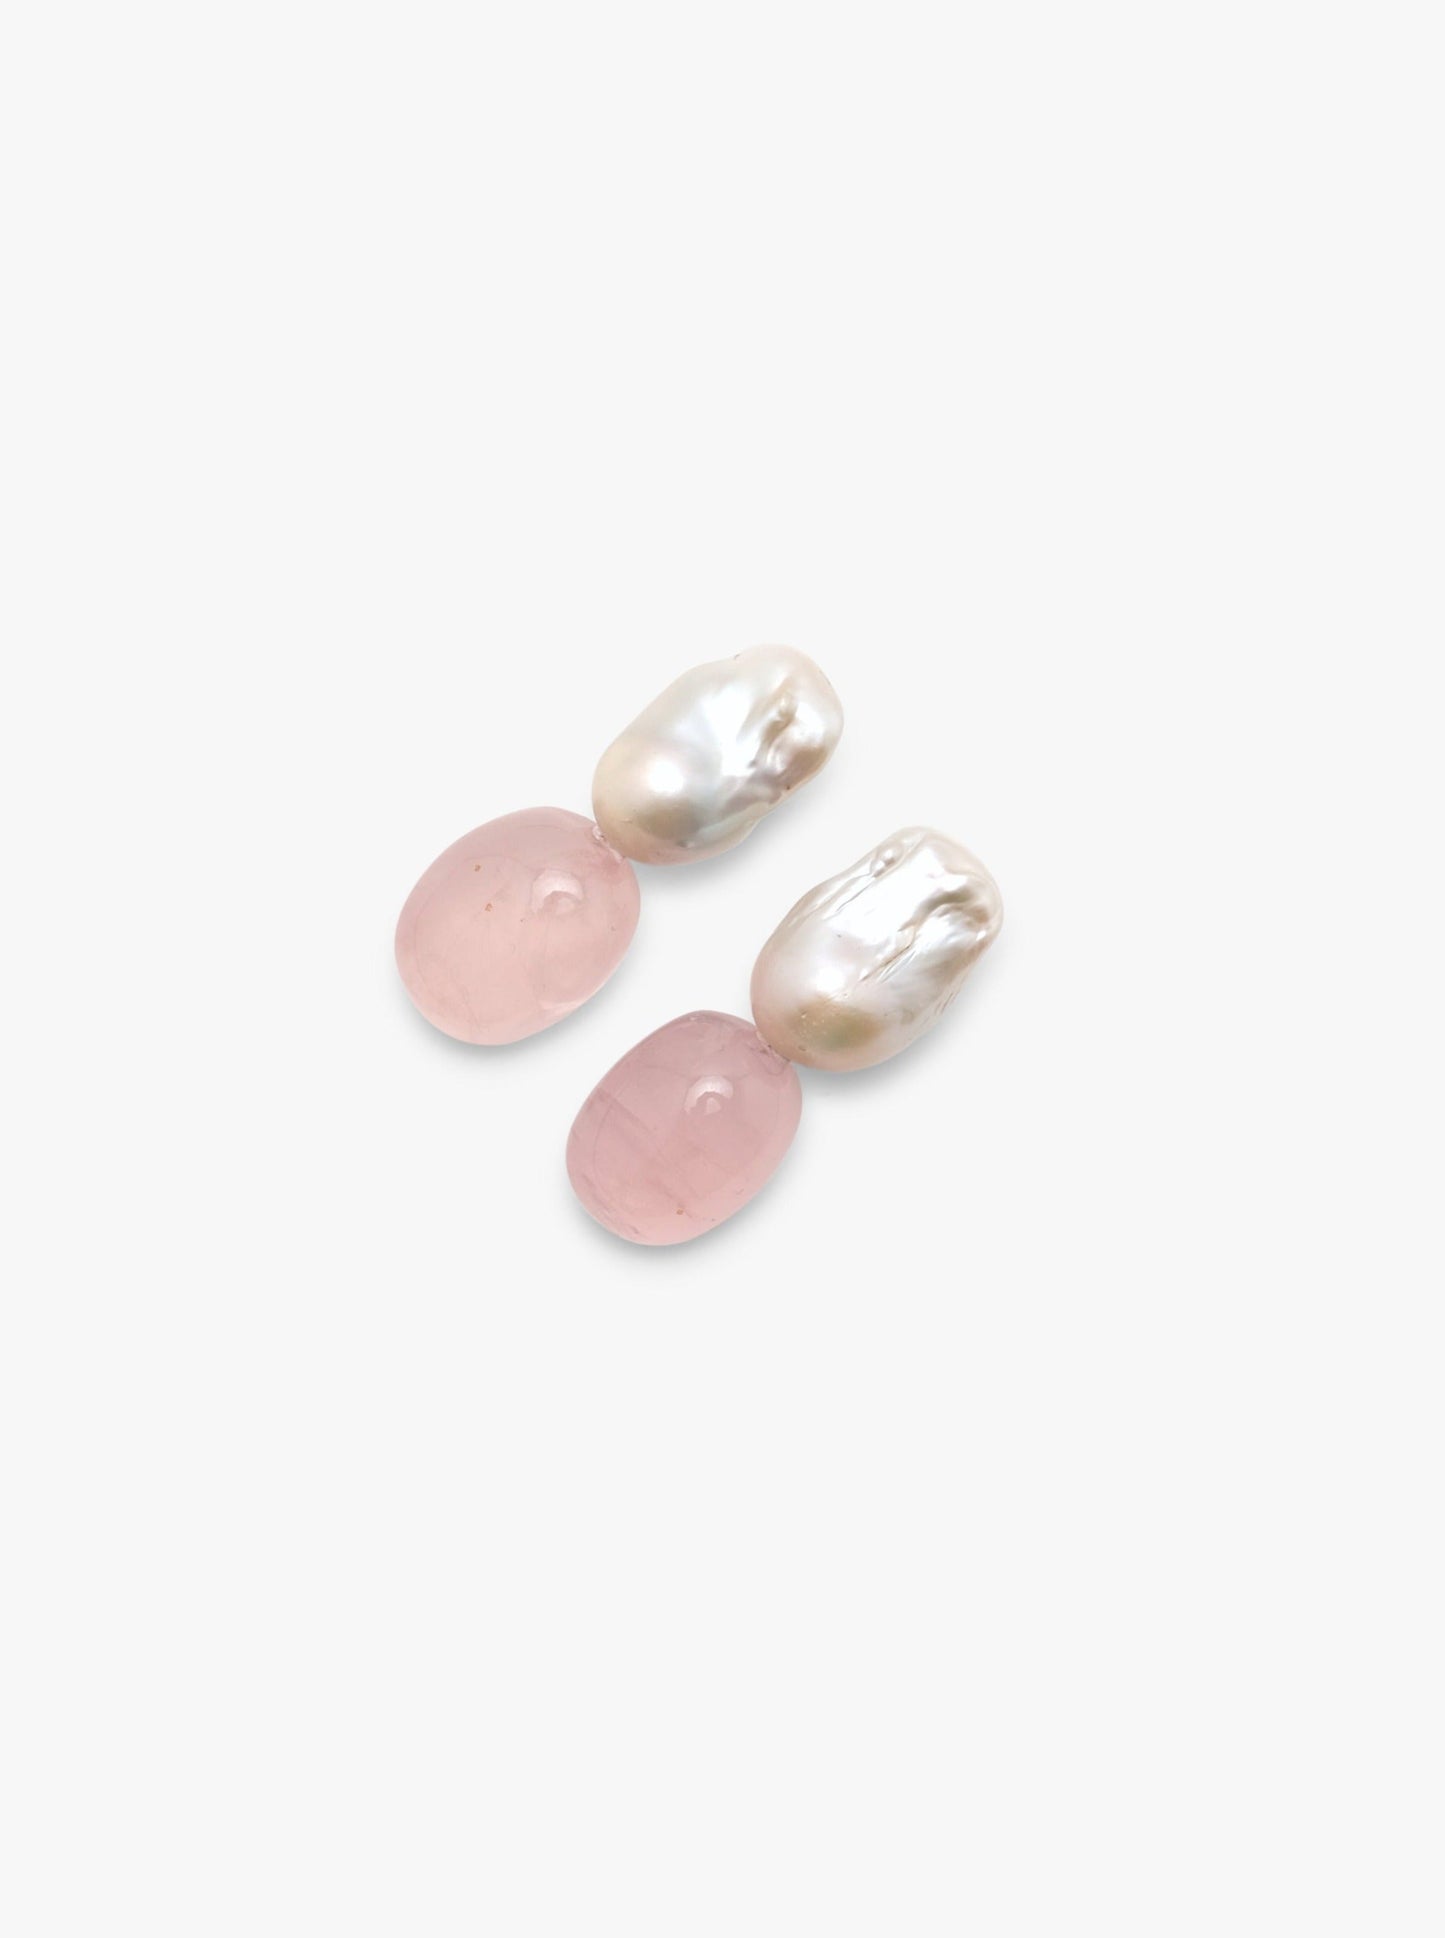 Stud earrings: baroque pearl, rose quartz